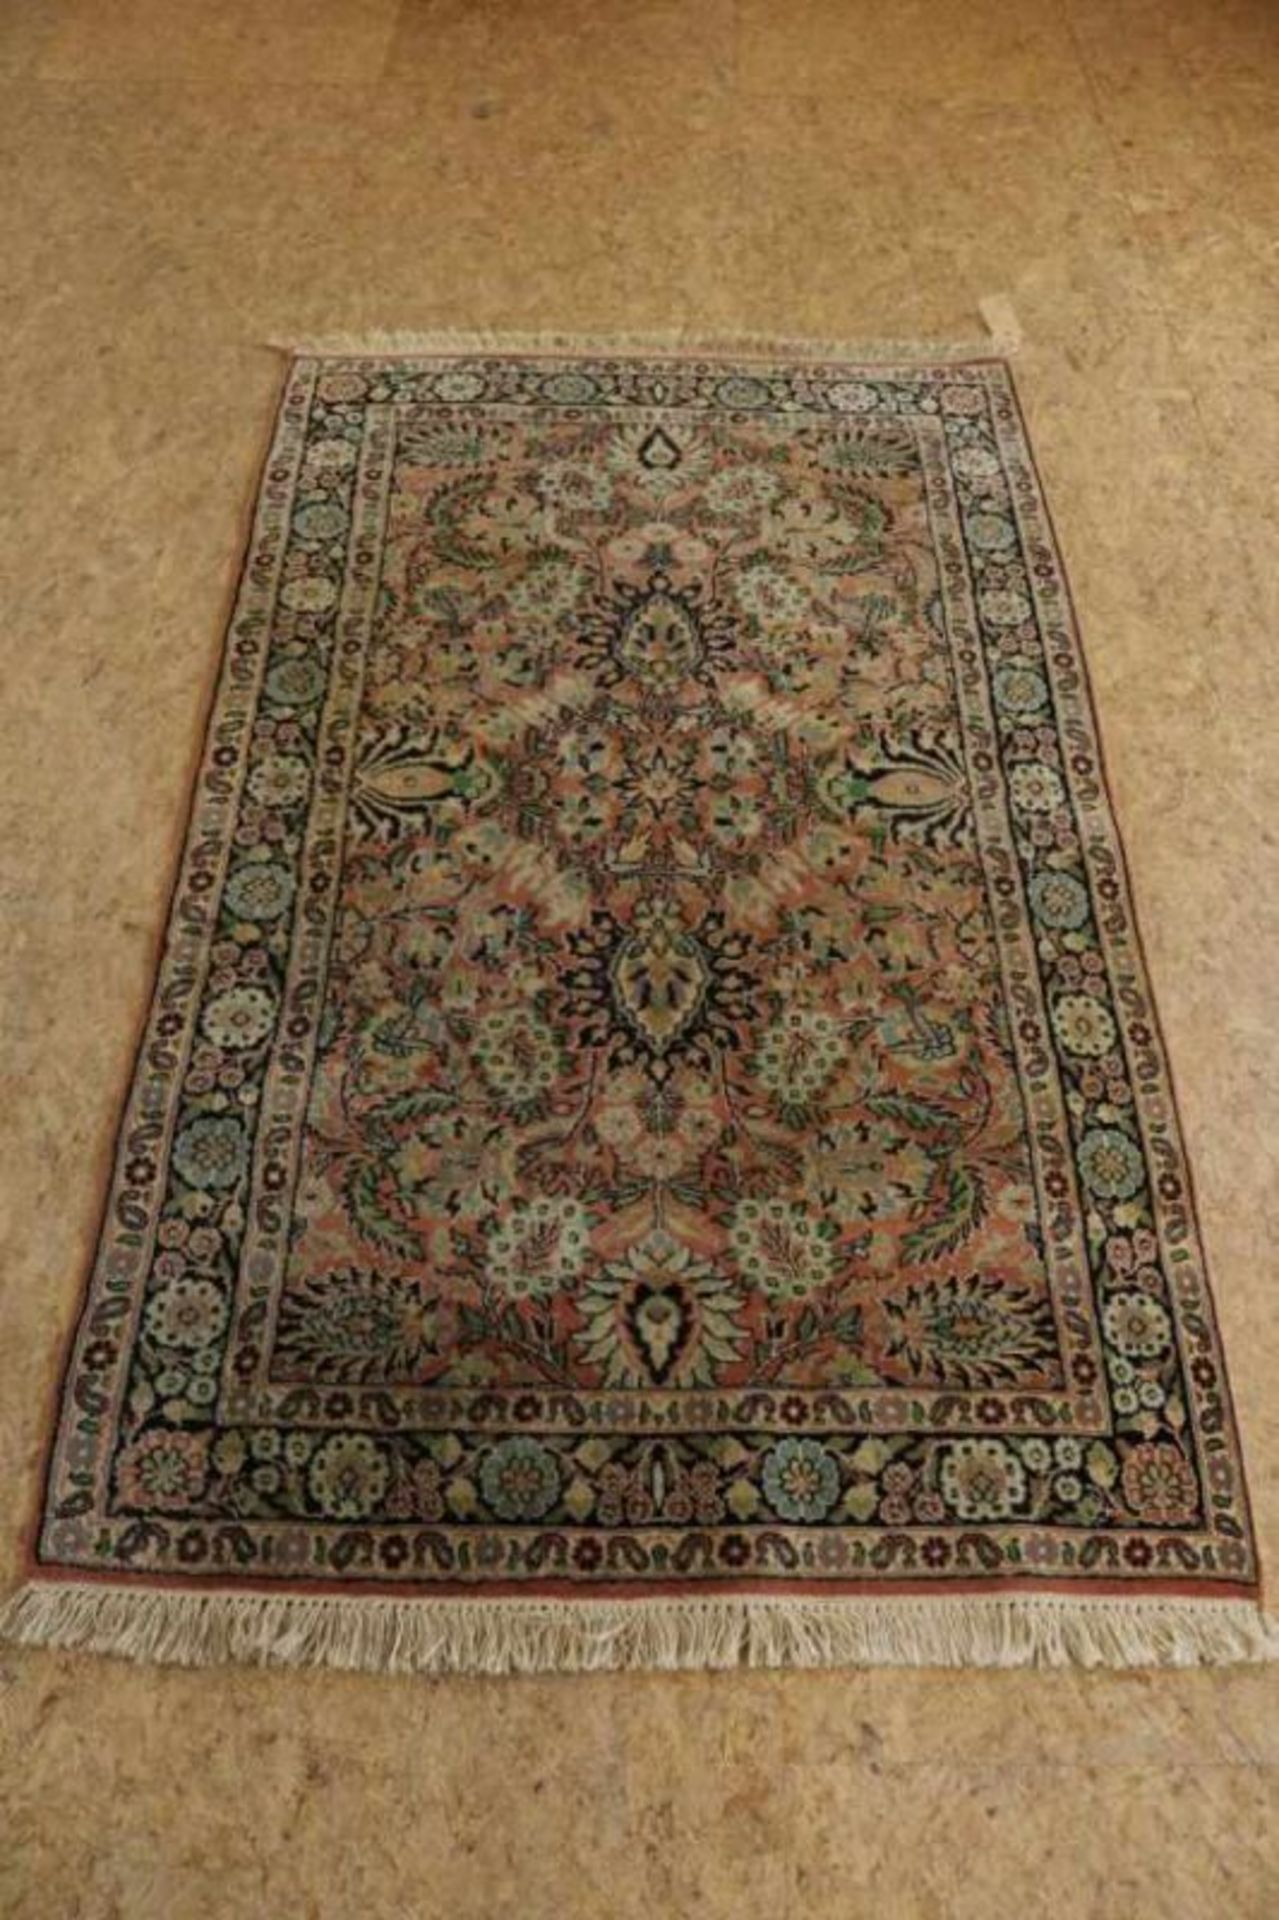 Tapijt, Kashmir met zijde, India, 157 x 96 cm. Carpet, Kashmiri with silk, India, 157 x 96 cm.